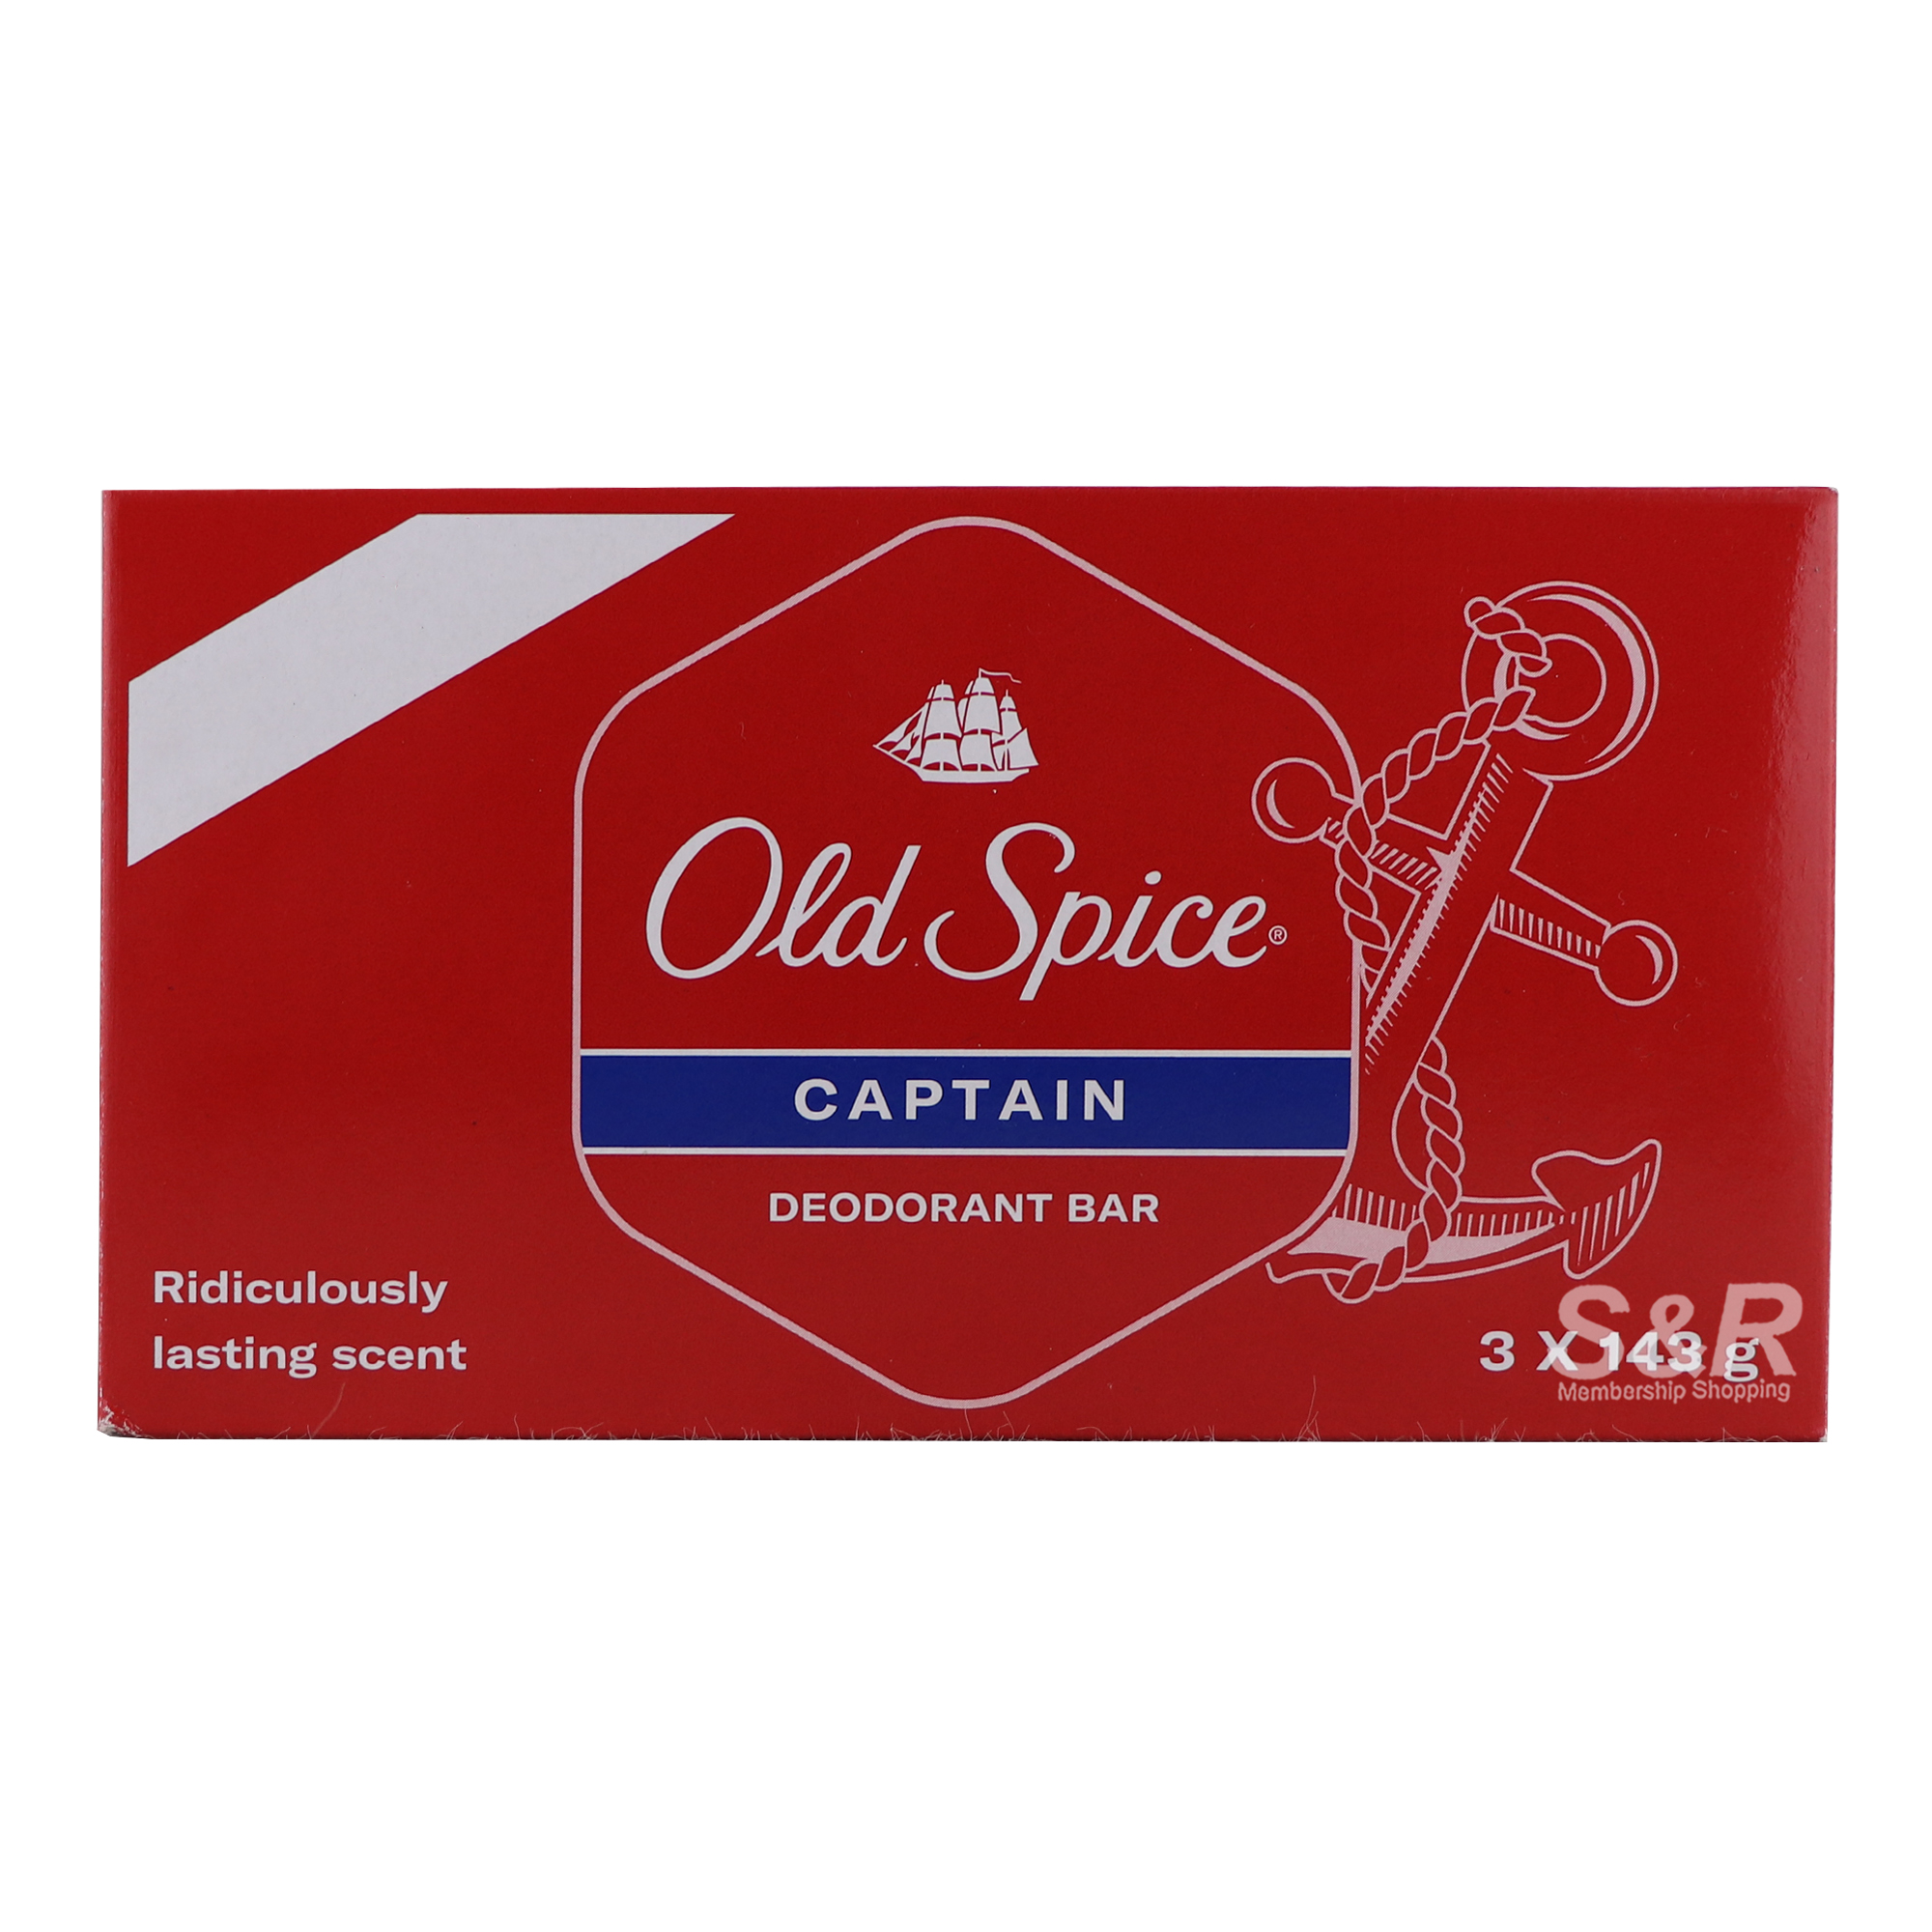 Old Spice Deodorant Bar Soap Captain 3 bars x 143g